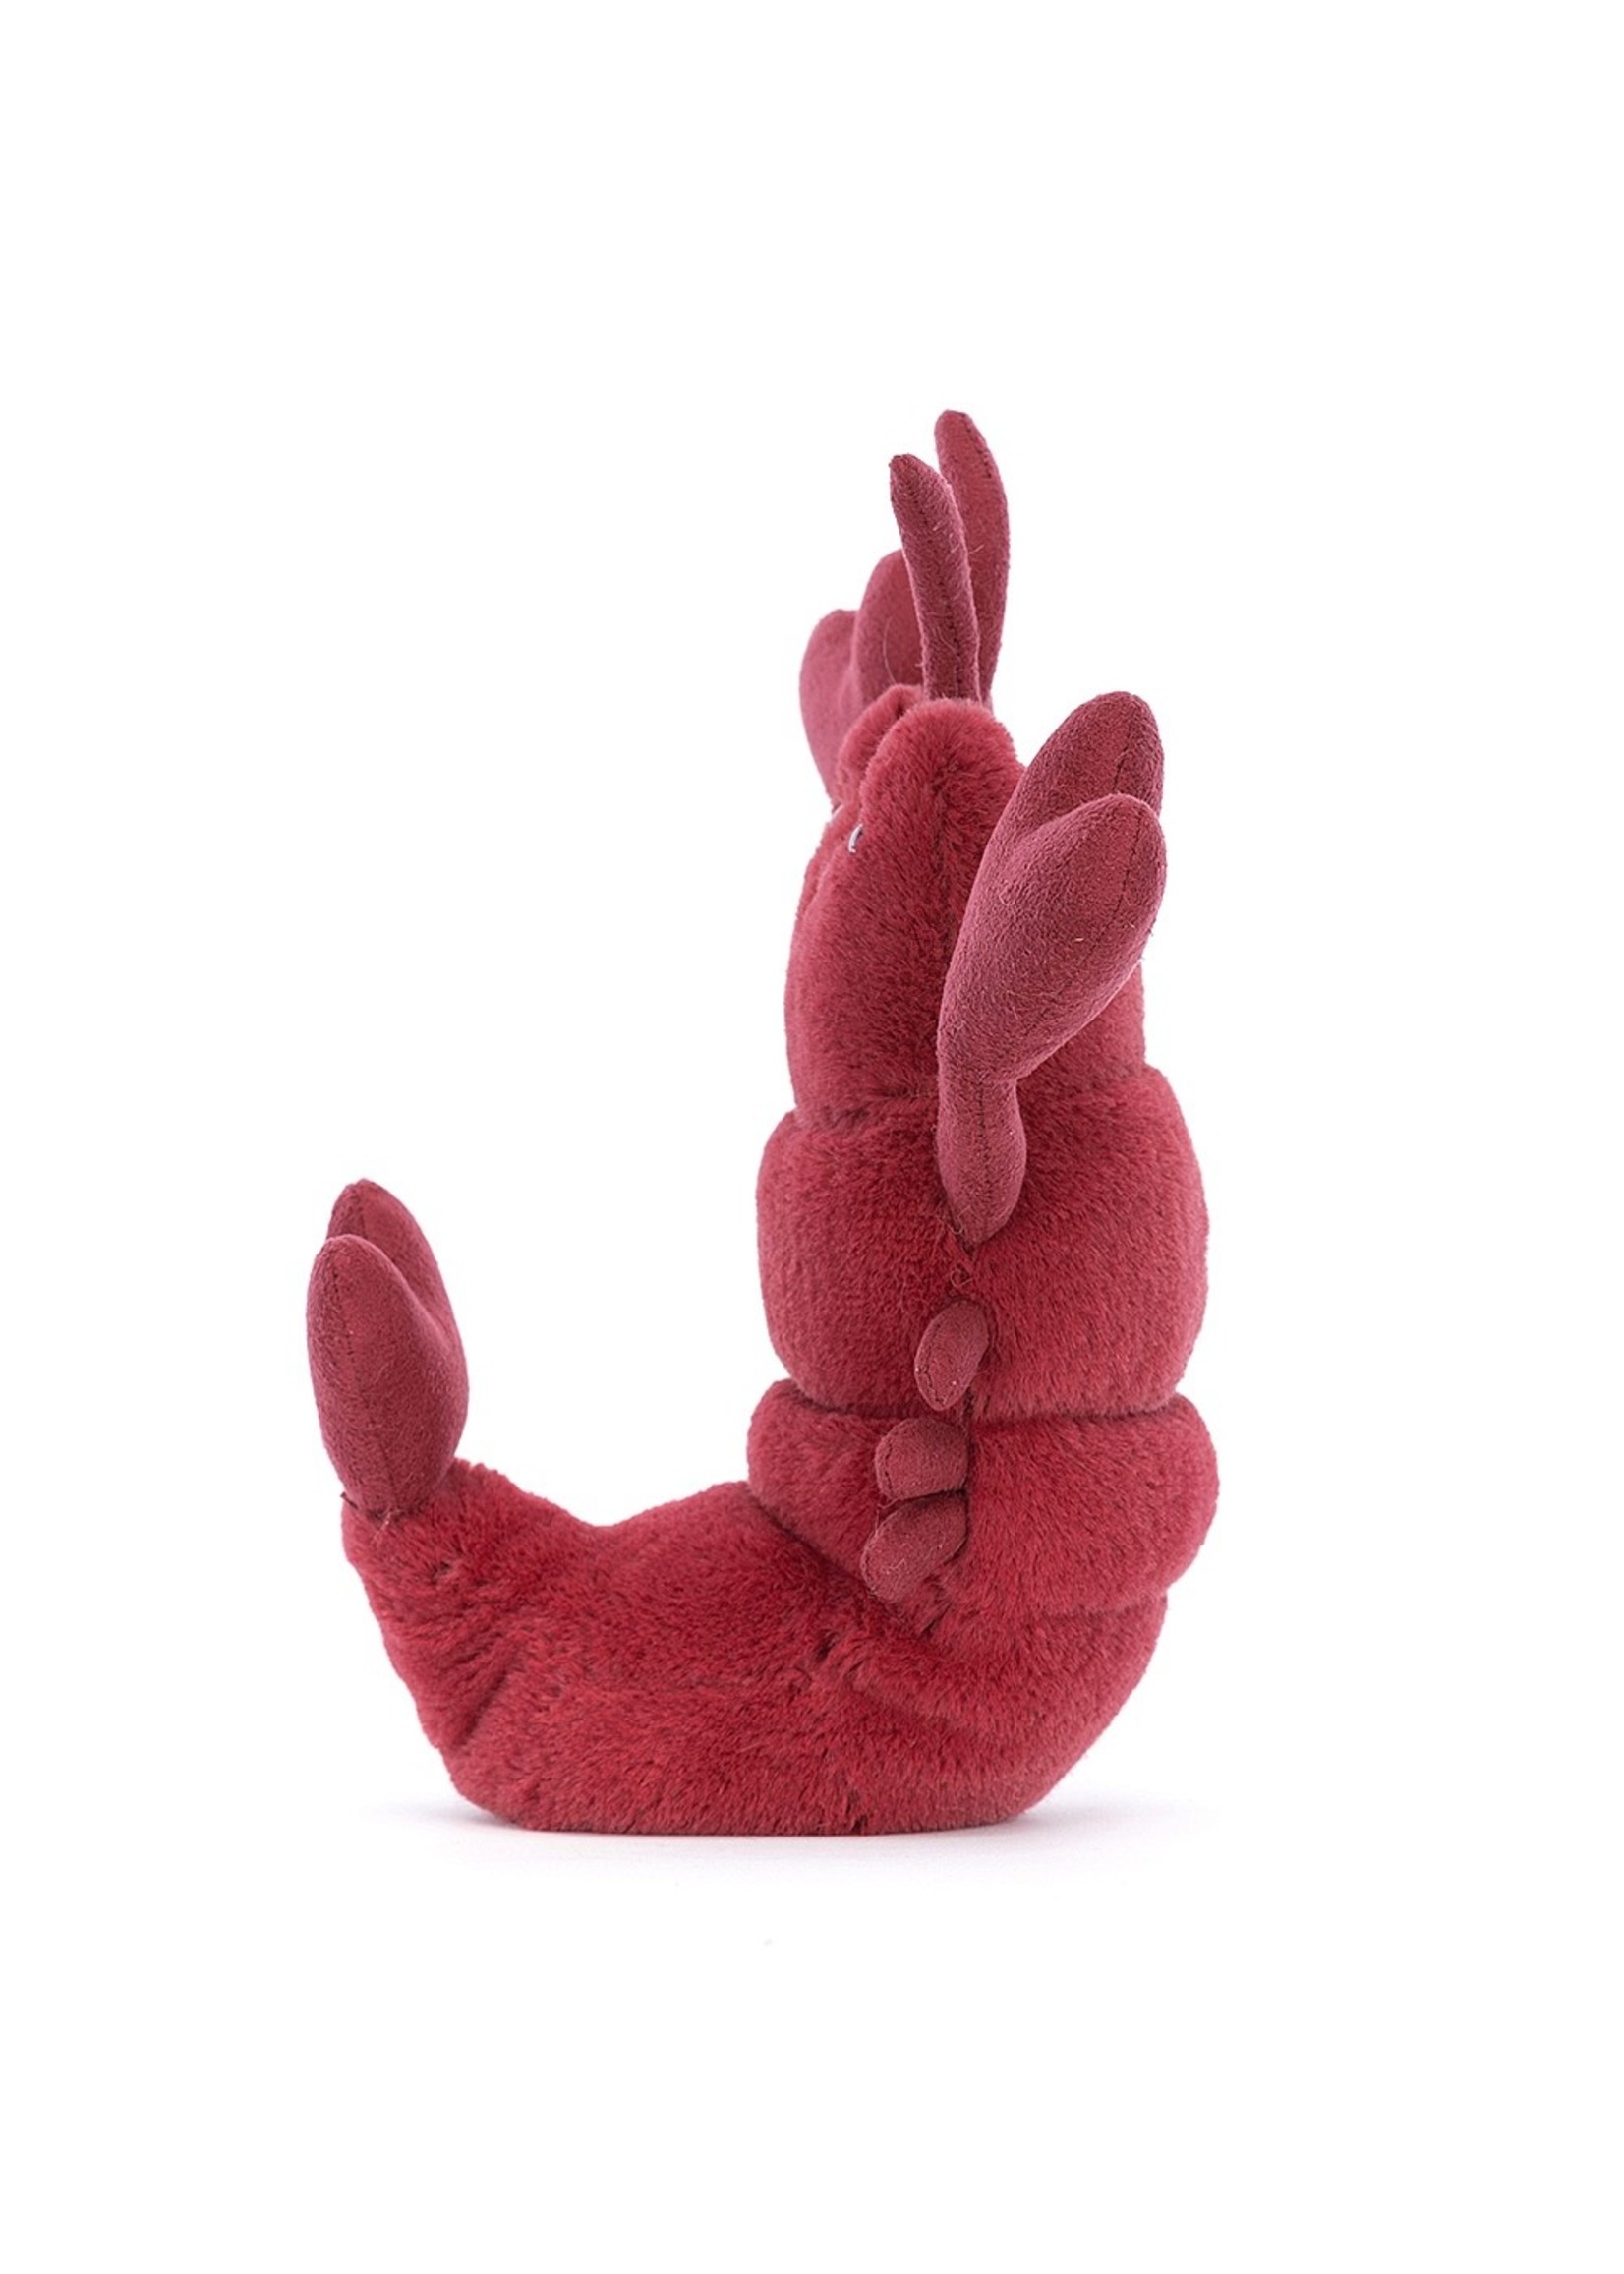 Jellycat Love-Me Lobster